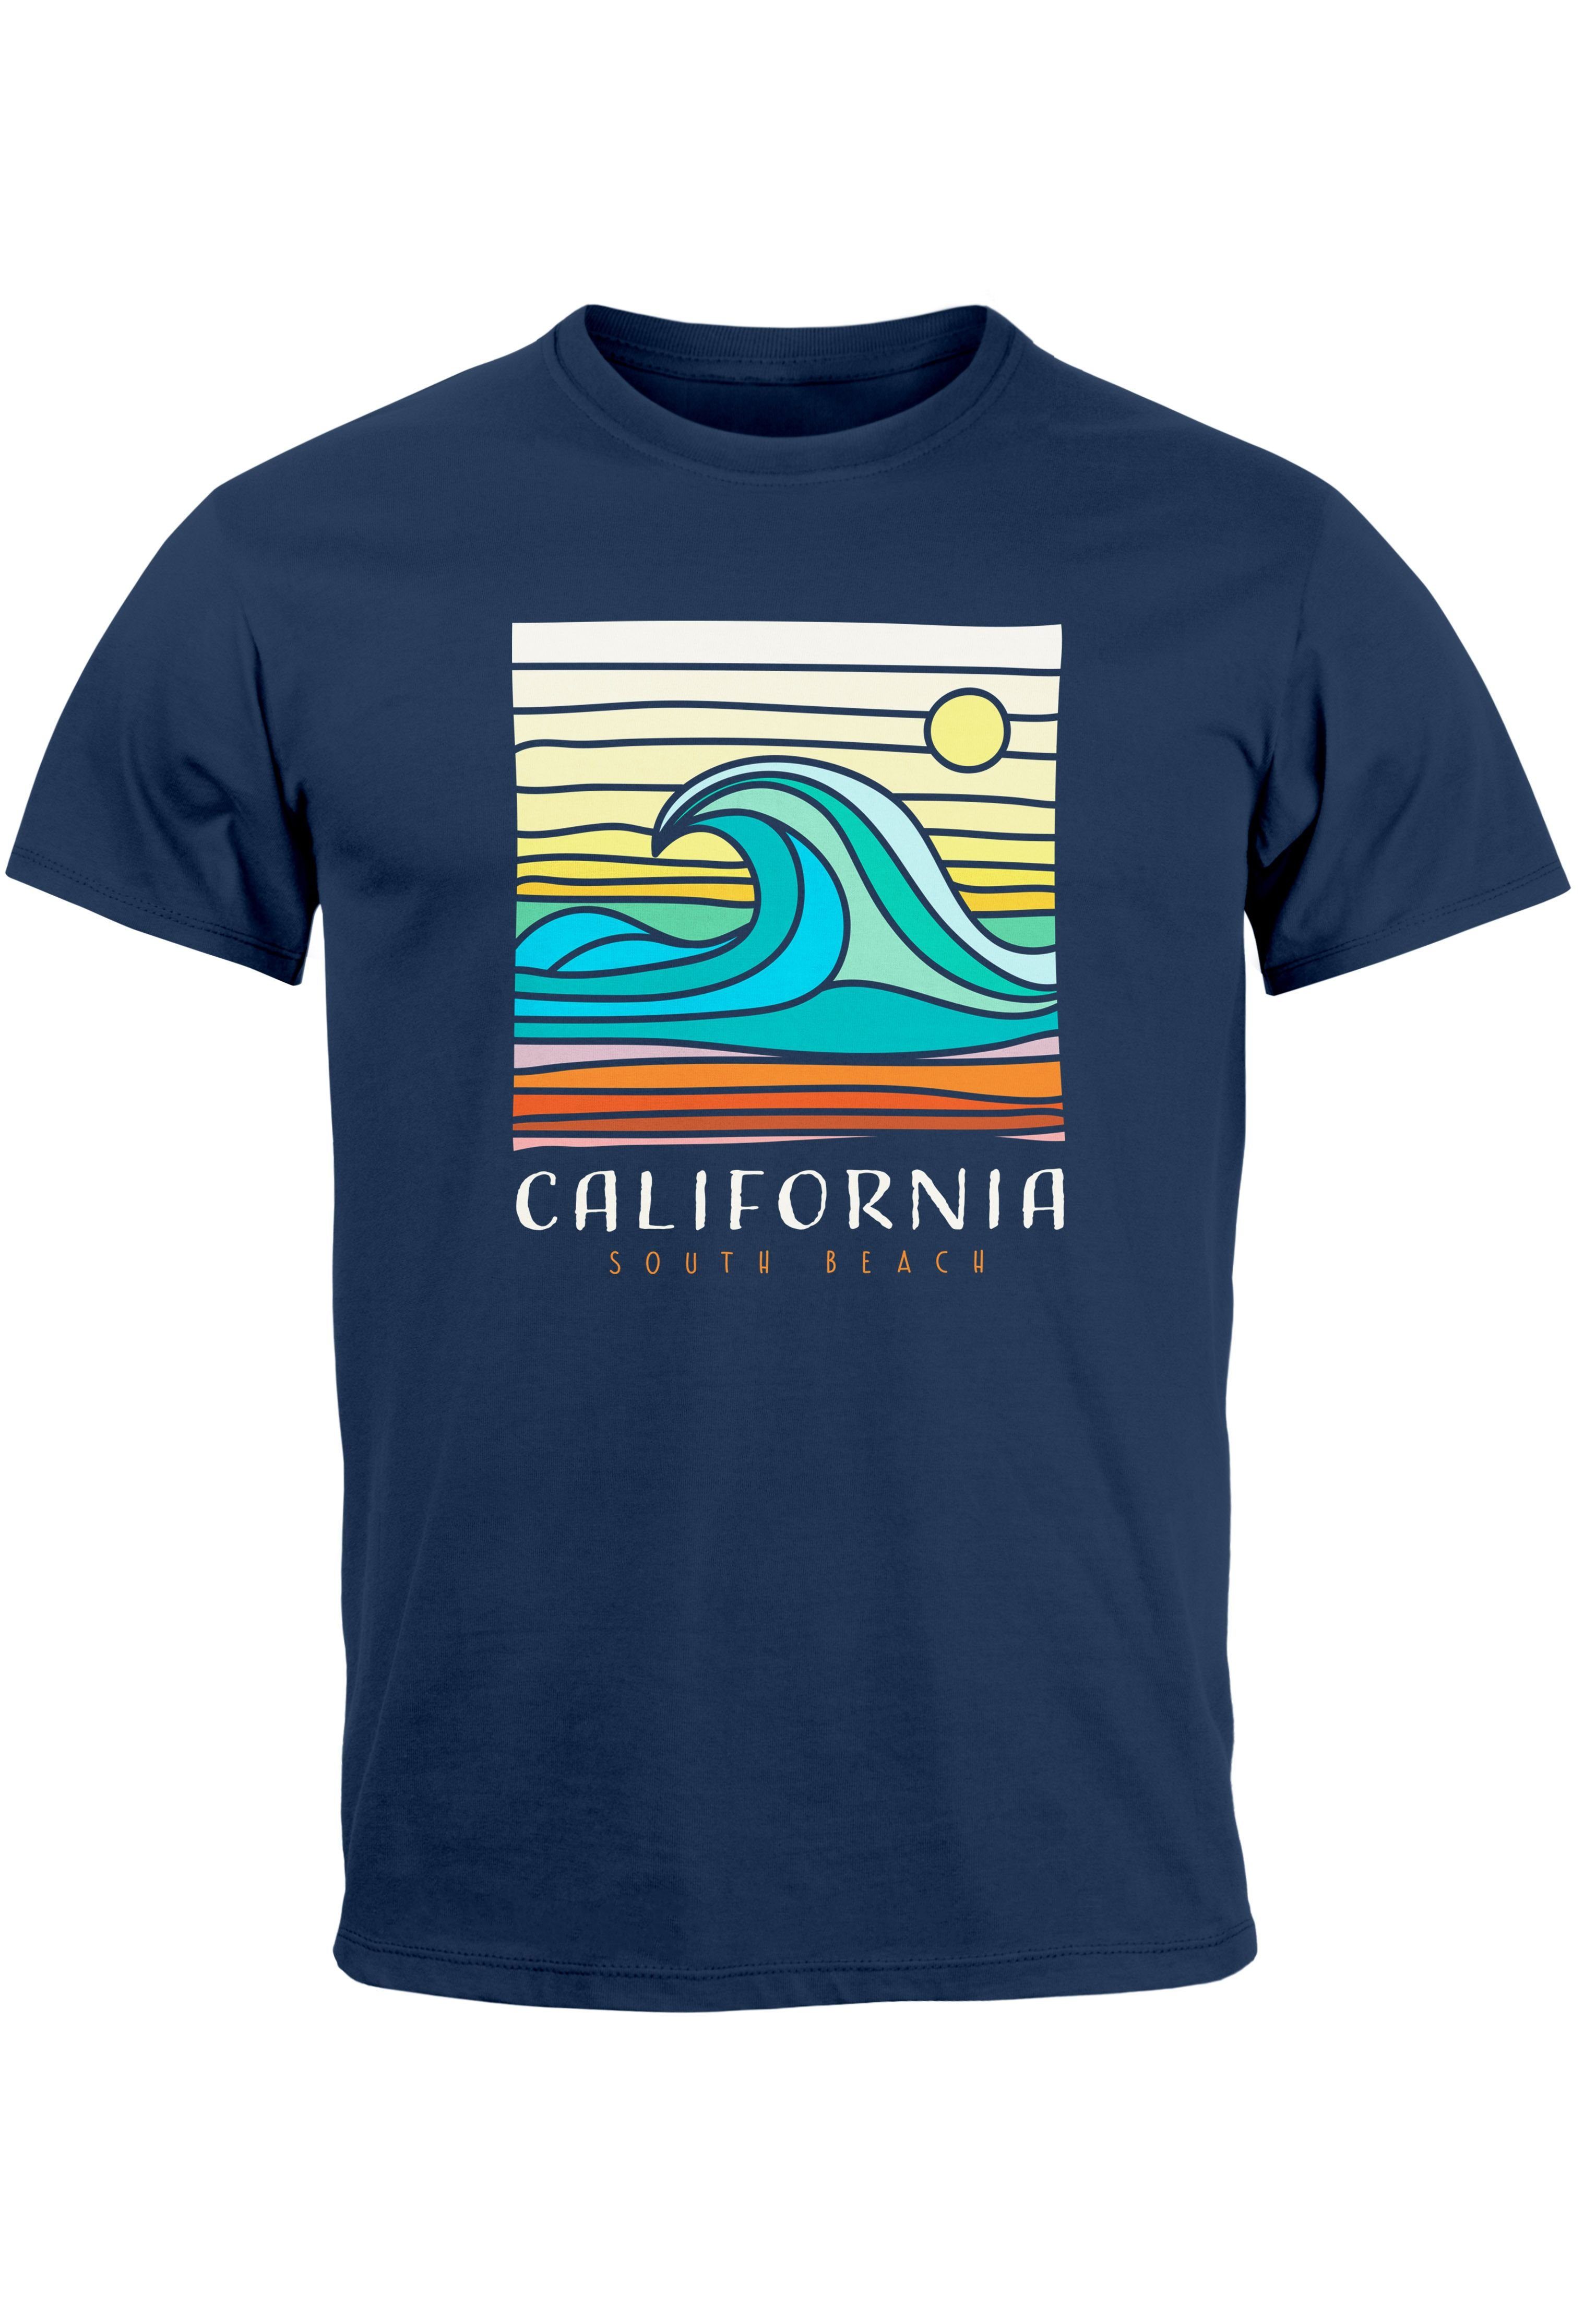 Neverless Print-Shirt Herren T-Shirt California South Beach Welle Wave Surfing Print Aufdruc mit Print navy | T-Shirts